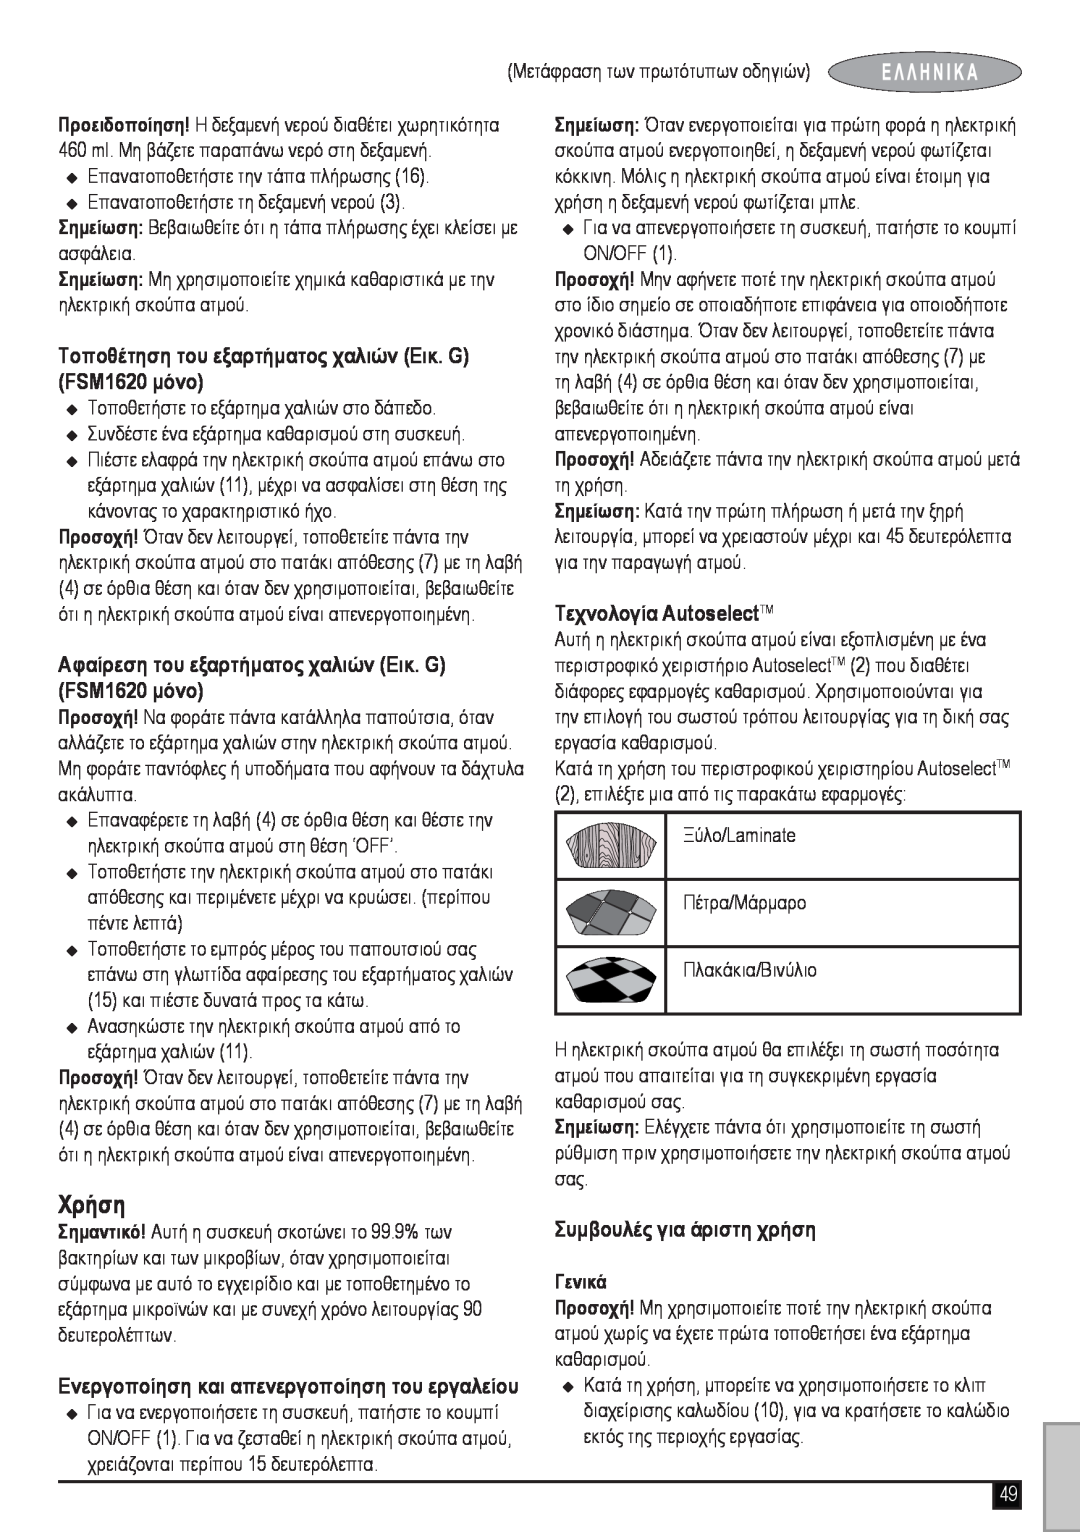 Black & Decker manual Χρήση, Τοποθέτηση του εξαρτήματος χαλιών Εικ. G FSM1620 μόνο, Τεχνολογία AutoselectTM, Γενικά 